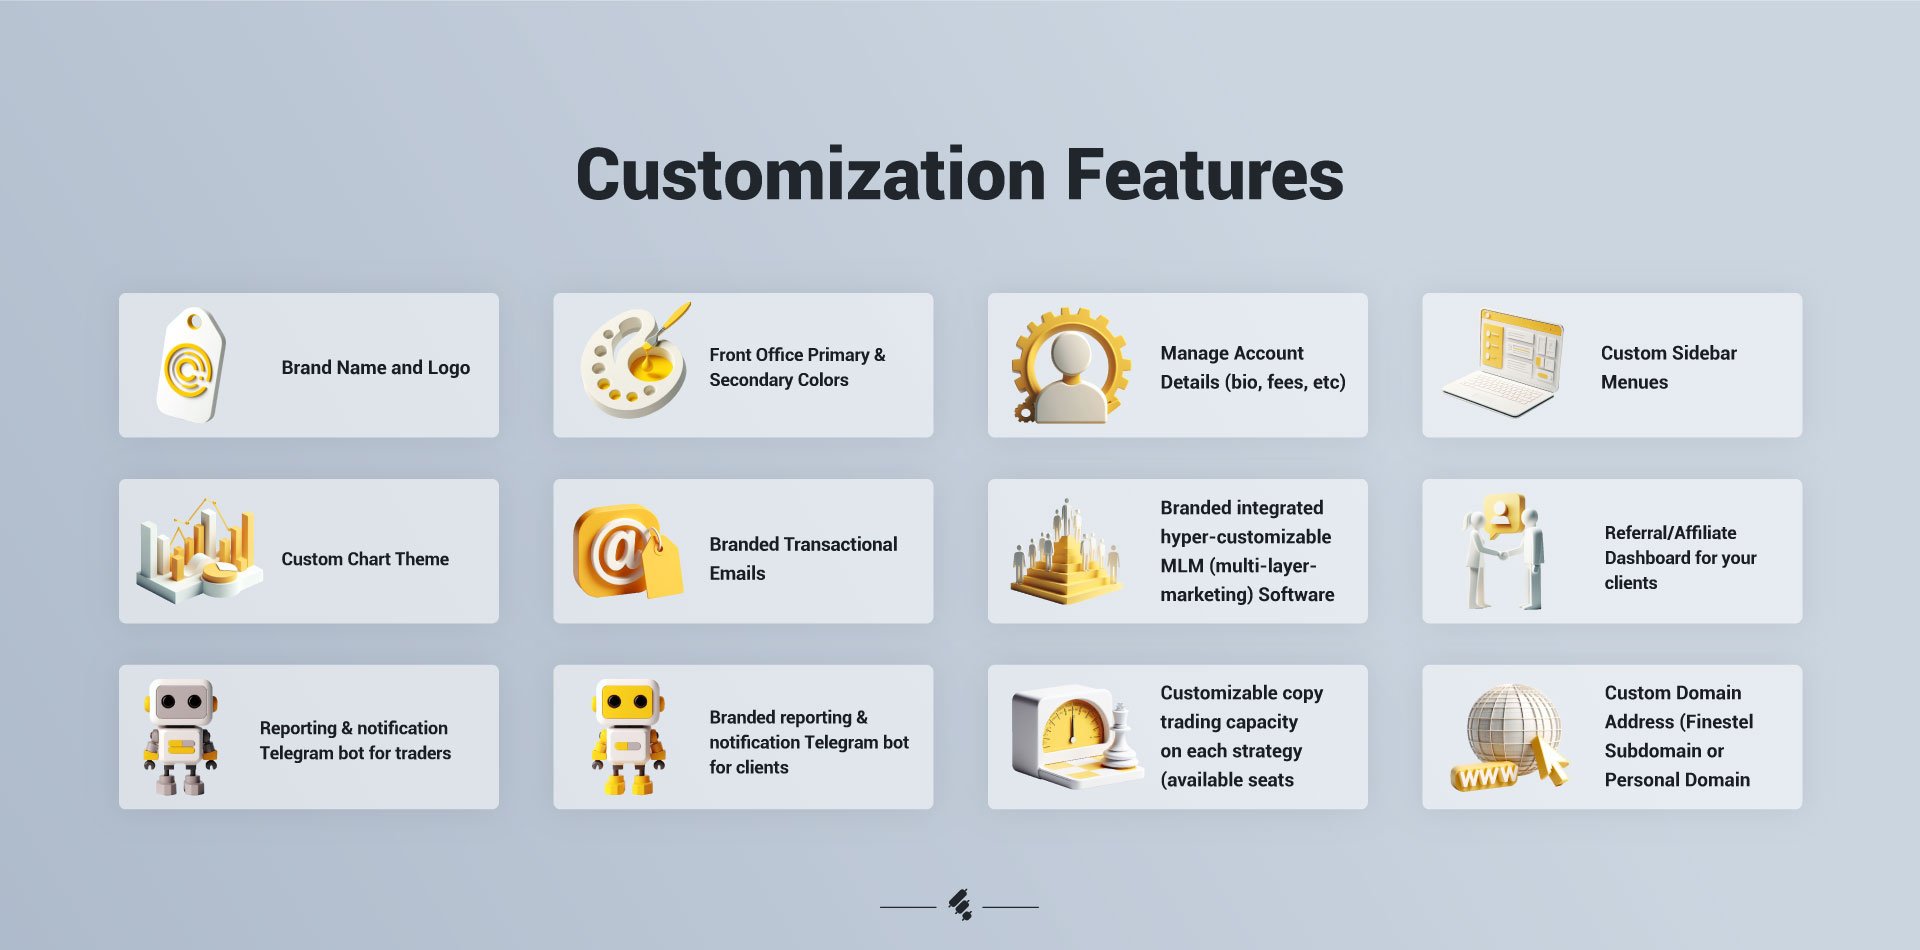 Finestel's Customization features